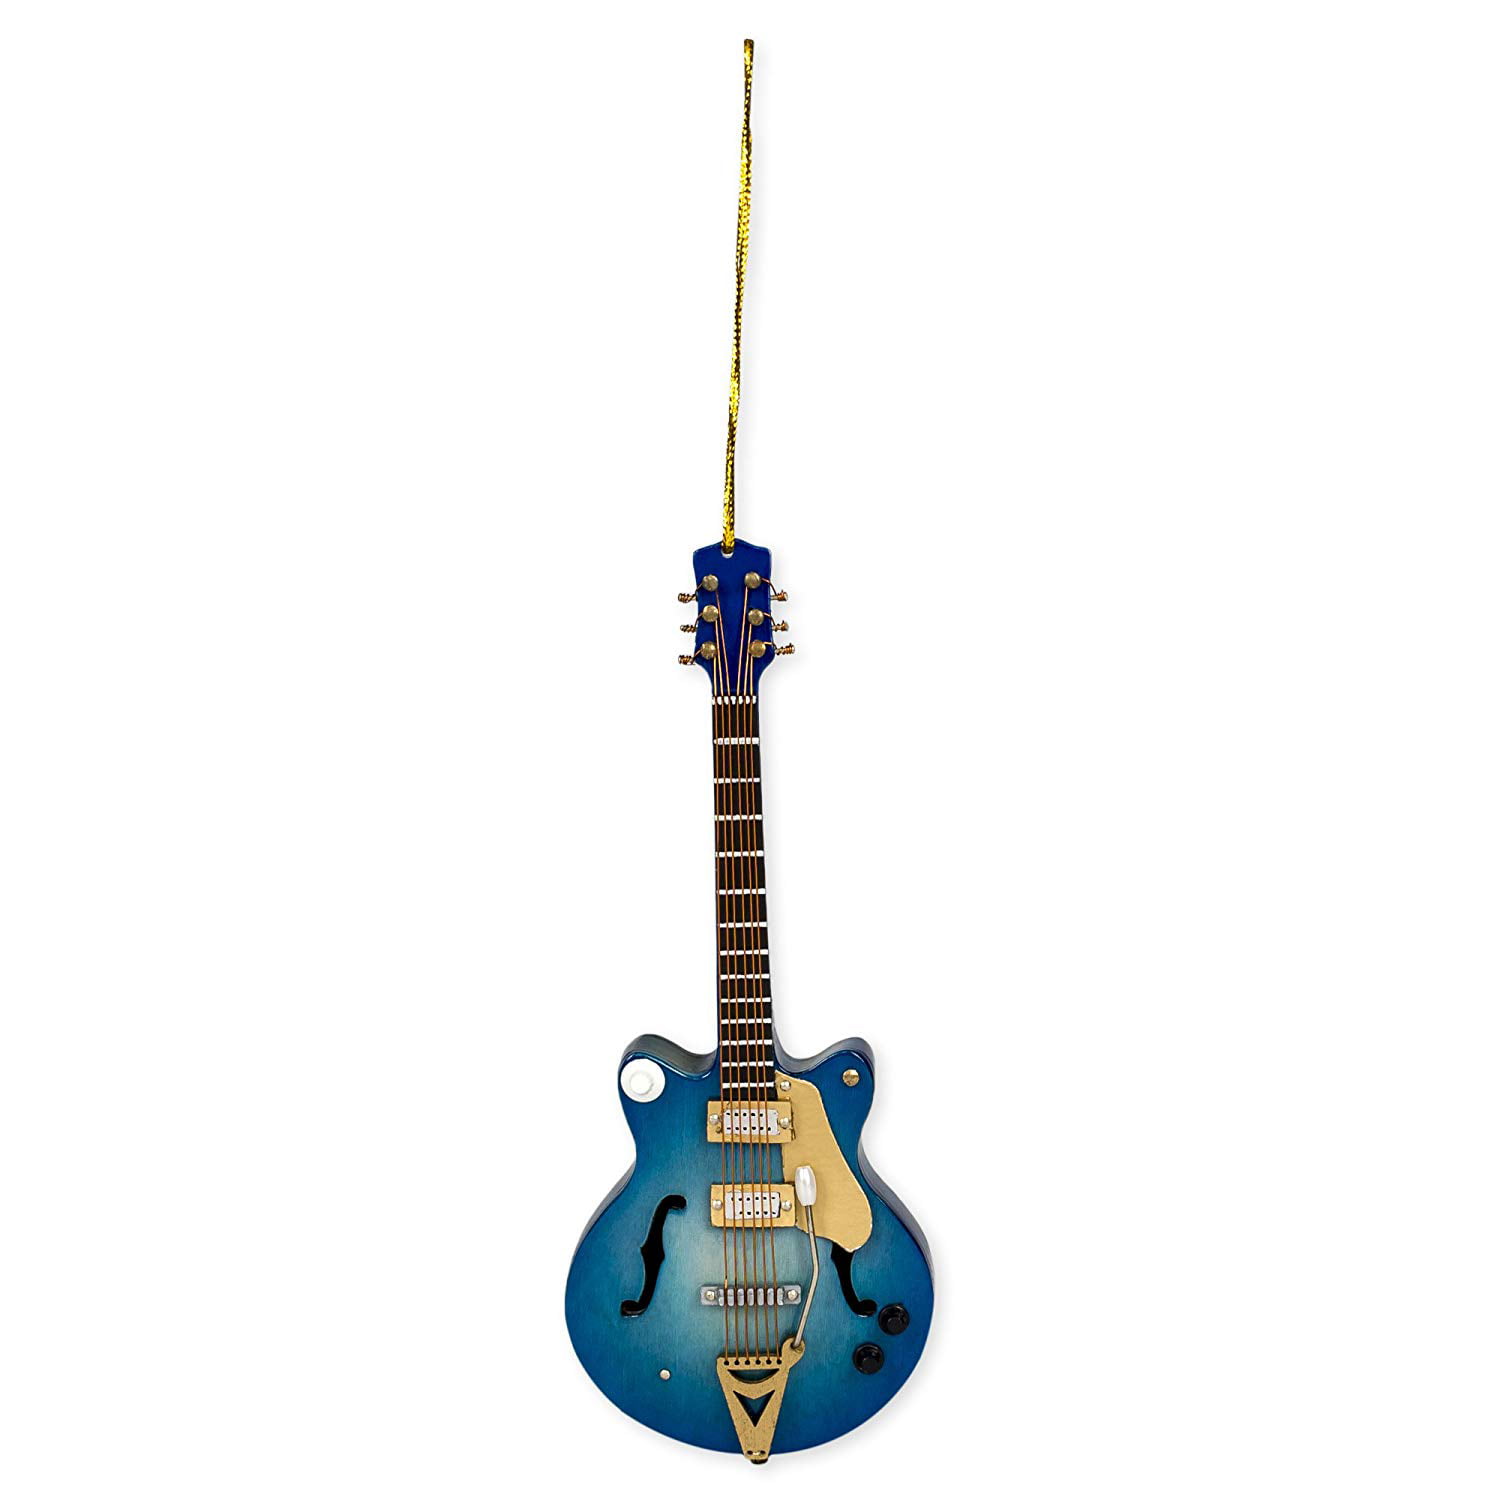 JL Black Guitar Music Instrument Replica Christmas Ornament Size 5 inch 